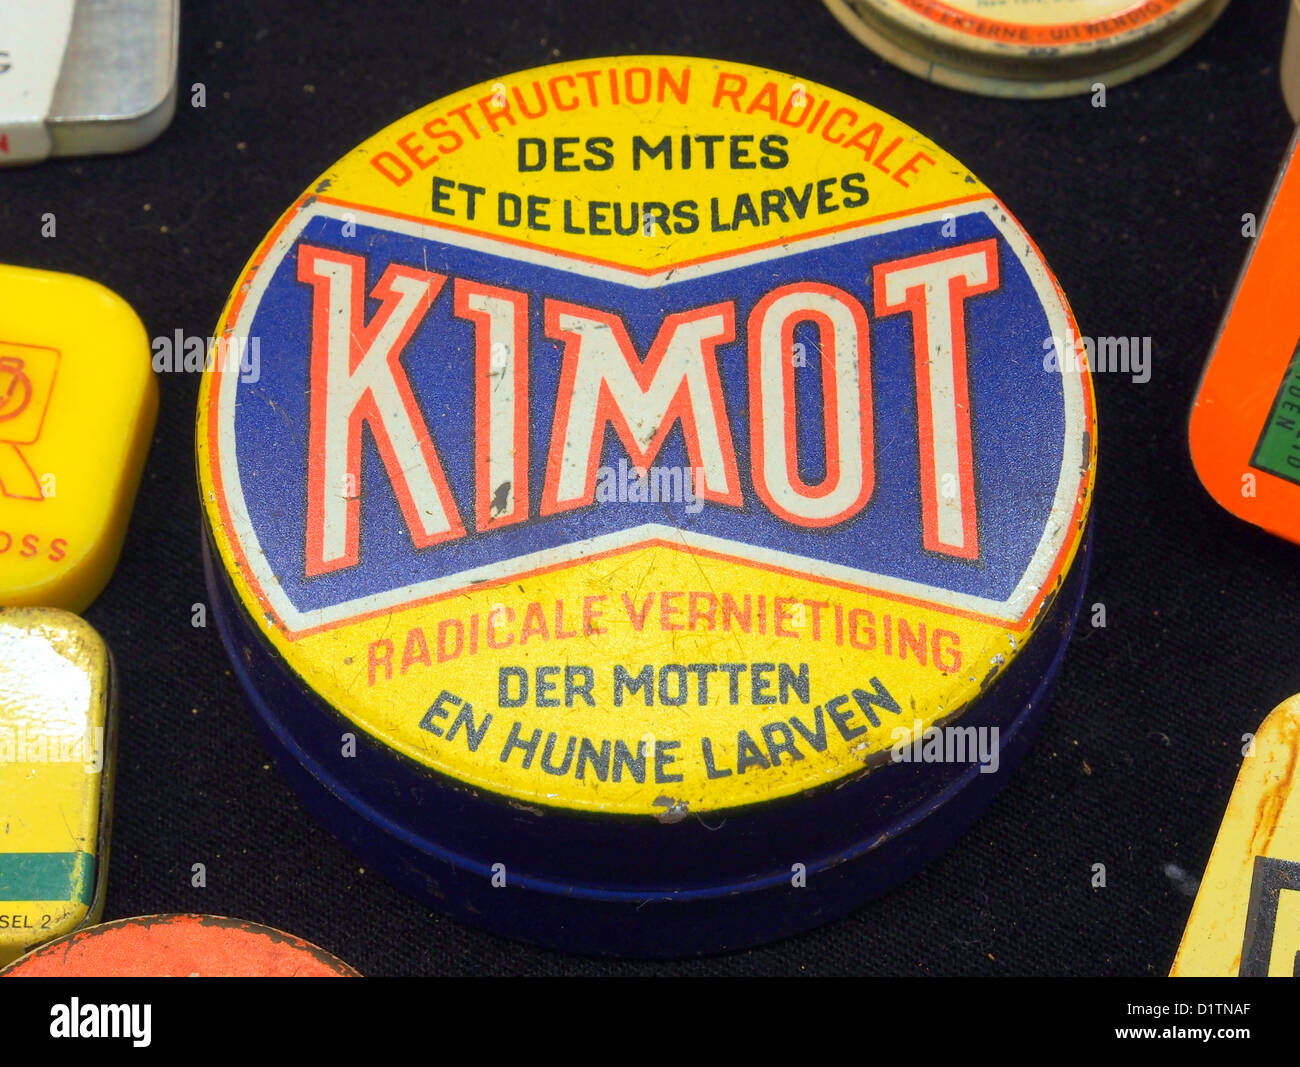 KIMOT, radicale vernietiging der motten en hun larven Stock Photo